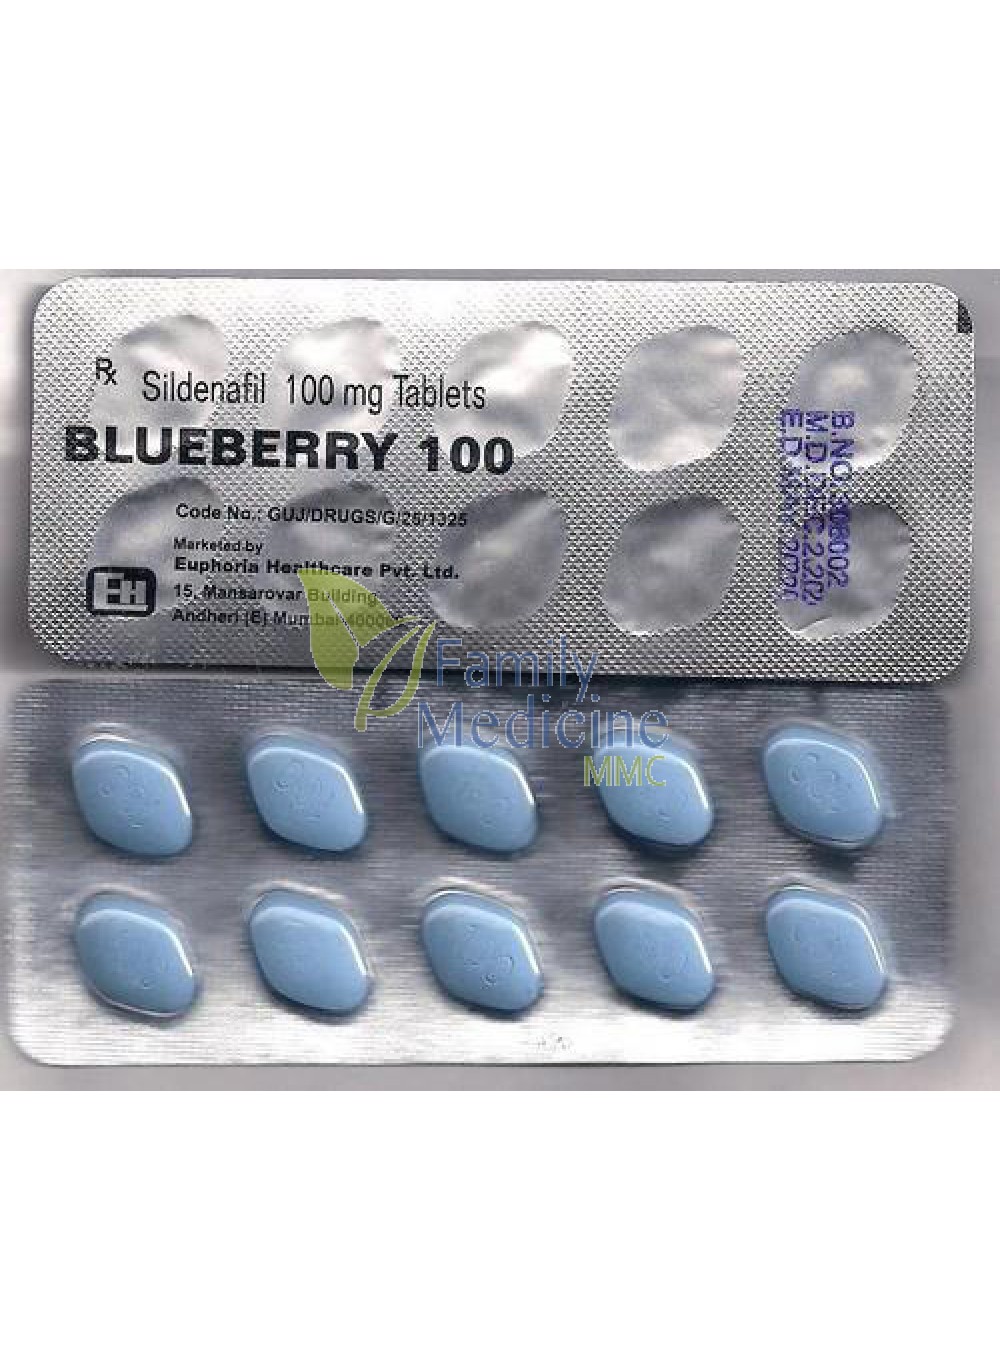 viagra tablets price in india